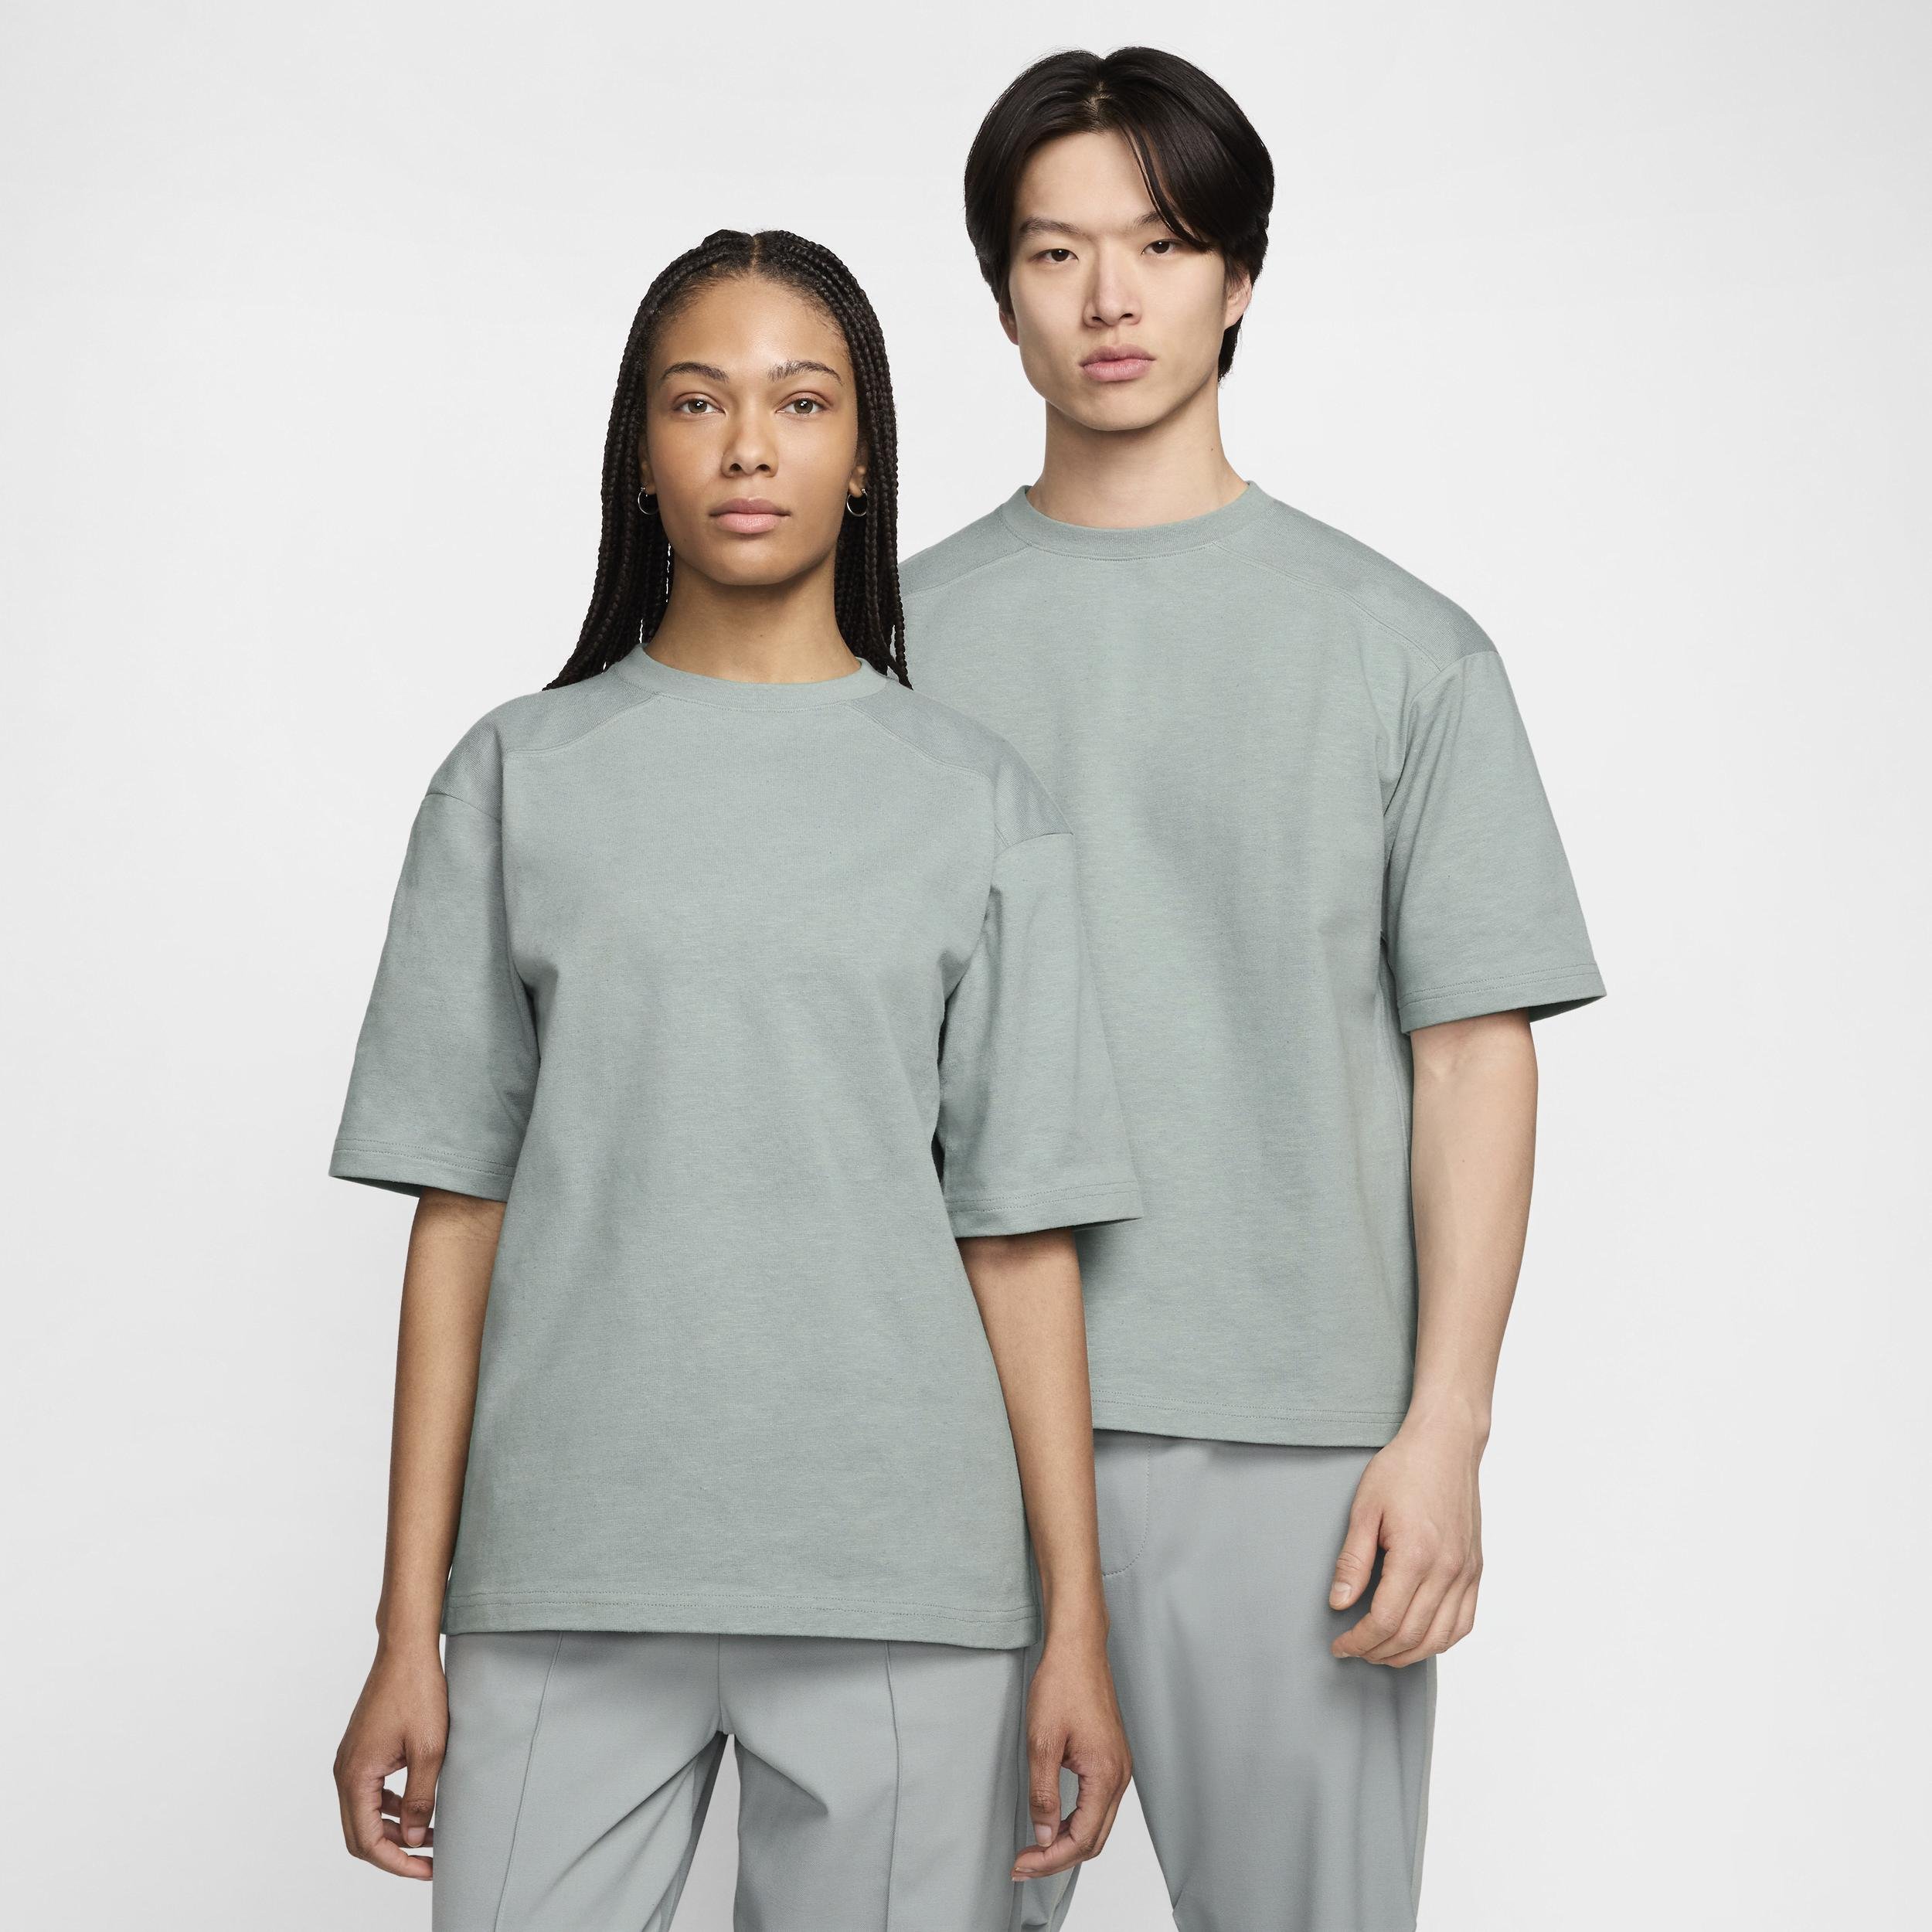 Nike Unisex Every Stitch Considered Forte Short-Sleeve T-Shirt by NIKE